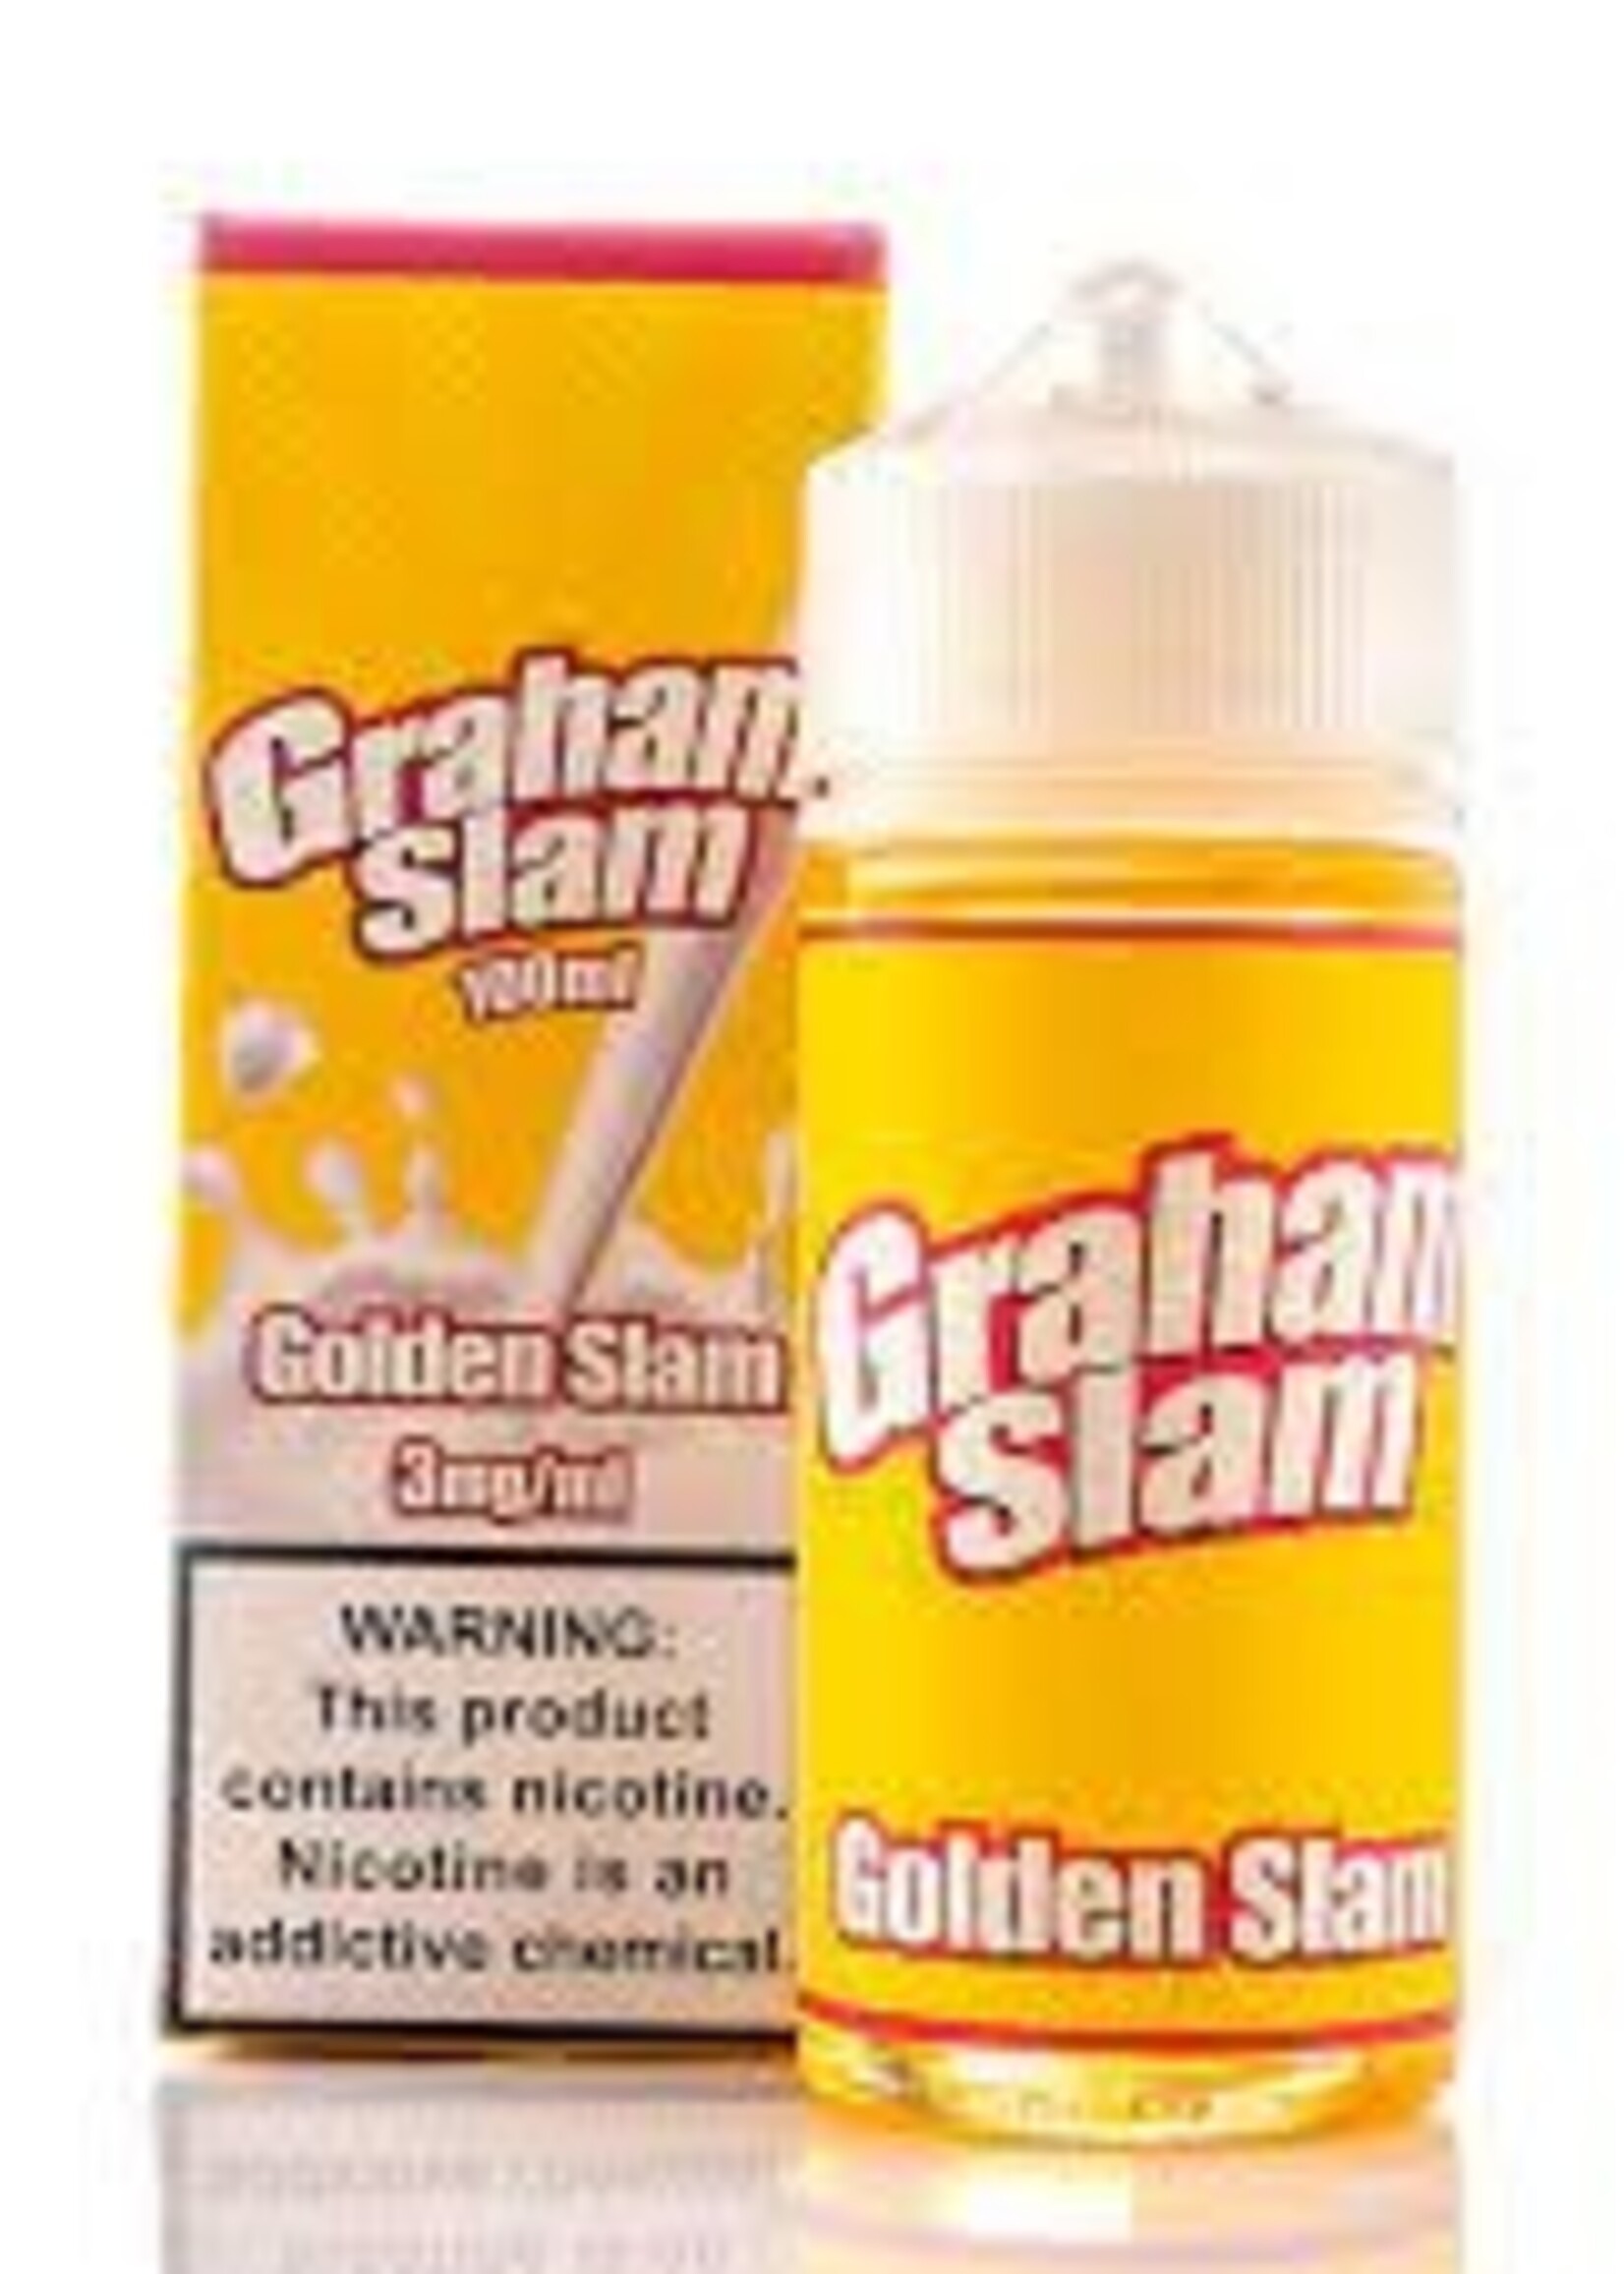 The Mamasan GRAHAM SLAM (GOLDEN SLAM)